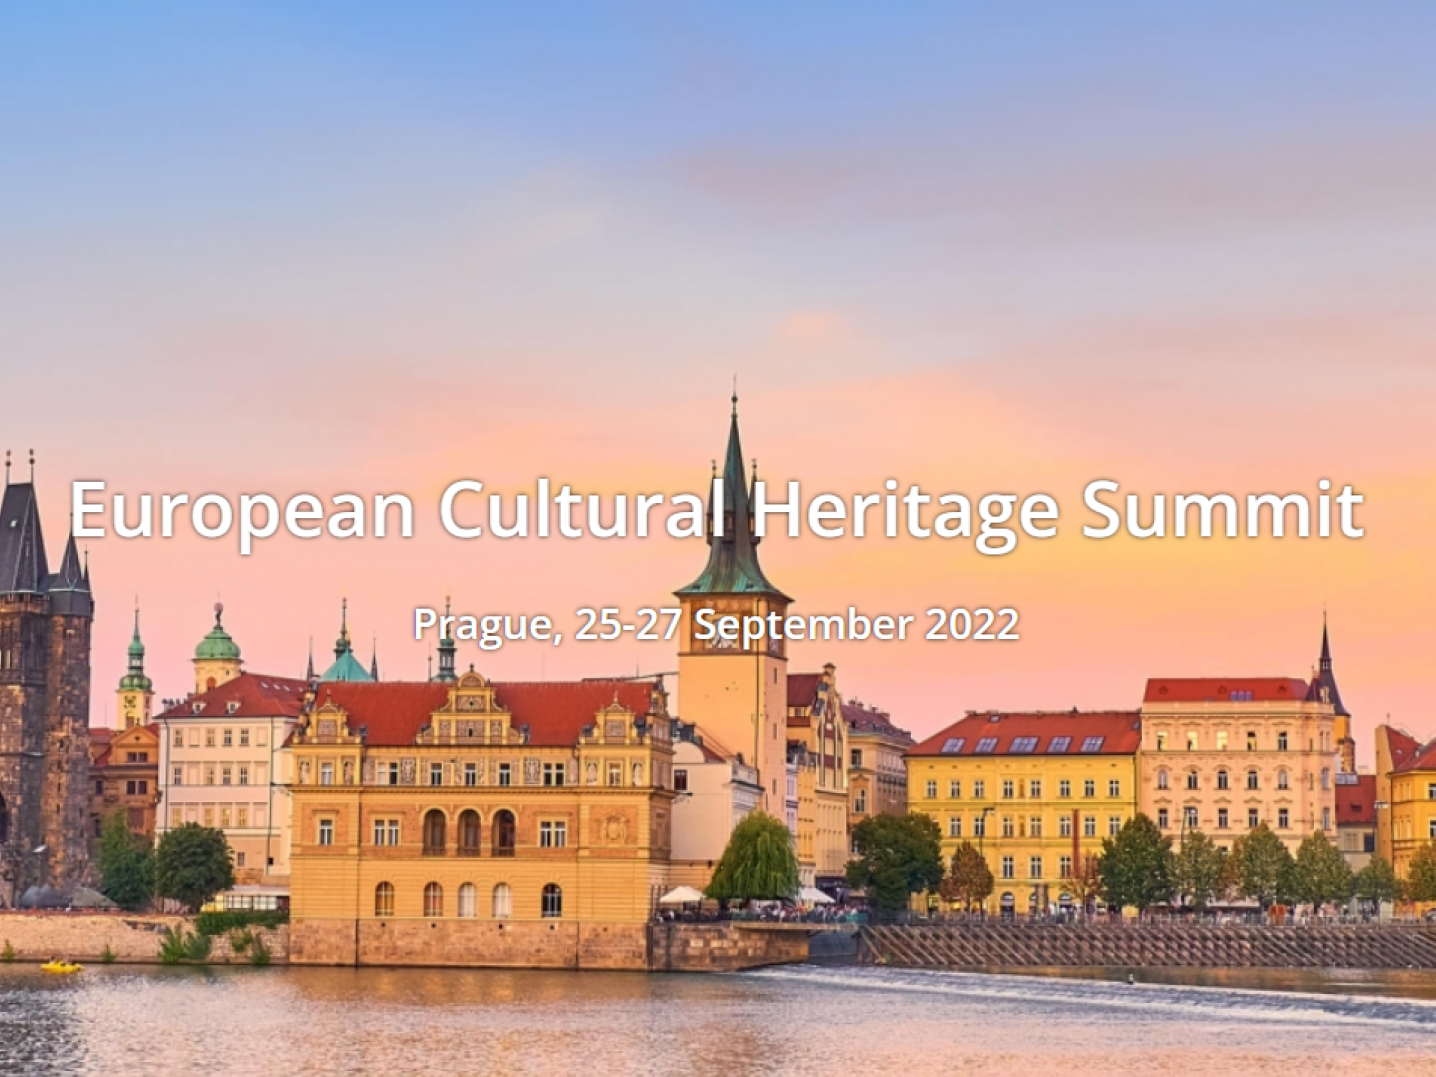 Europa Nostra European Cultural Heritage Summit 2022